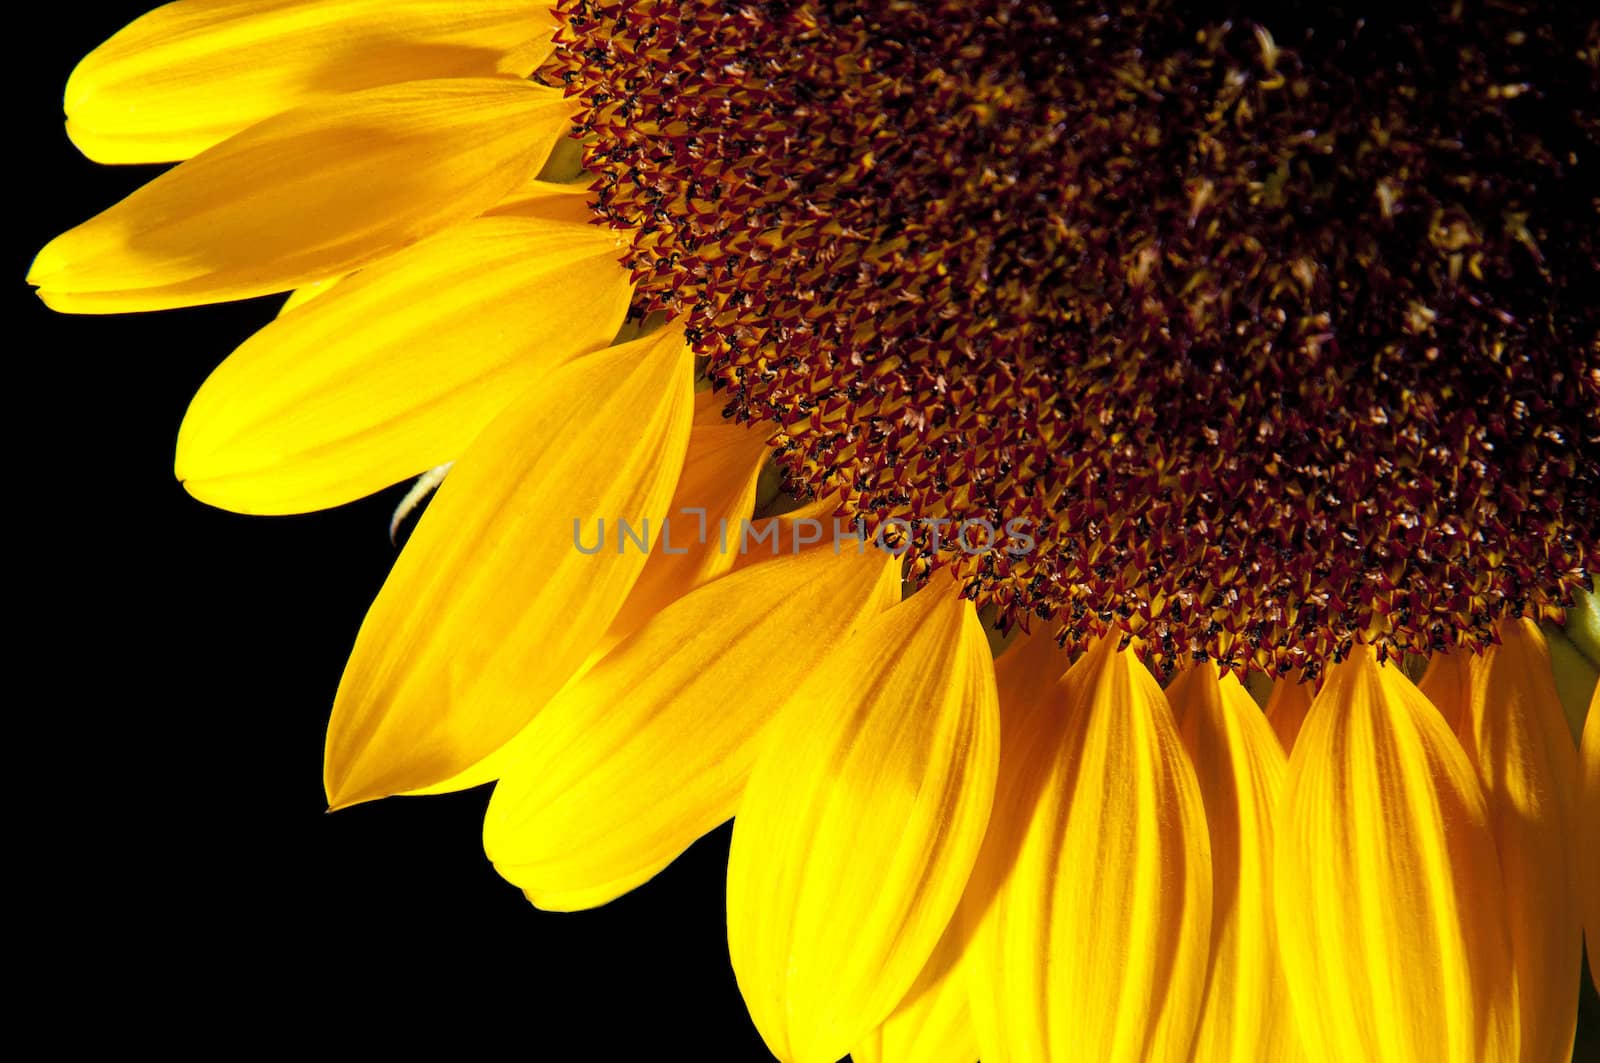 Sunflower by rodrigobellizzi